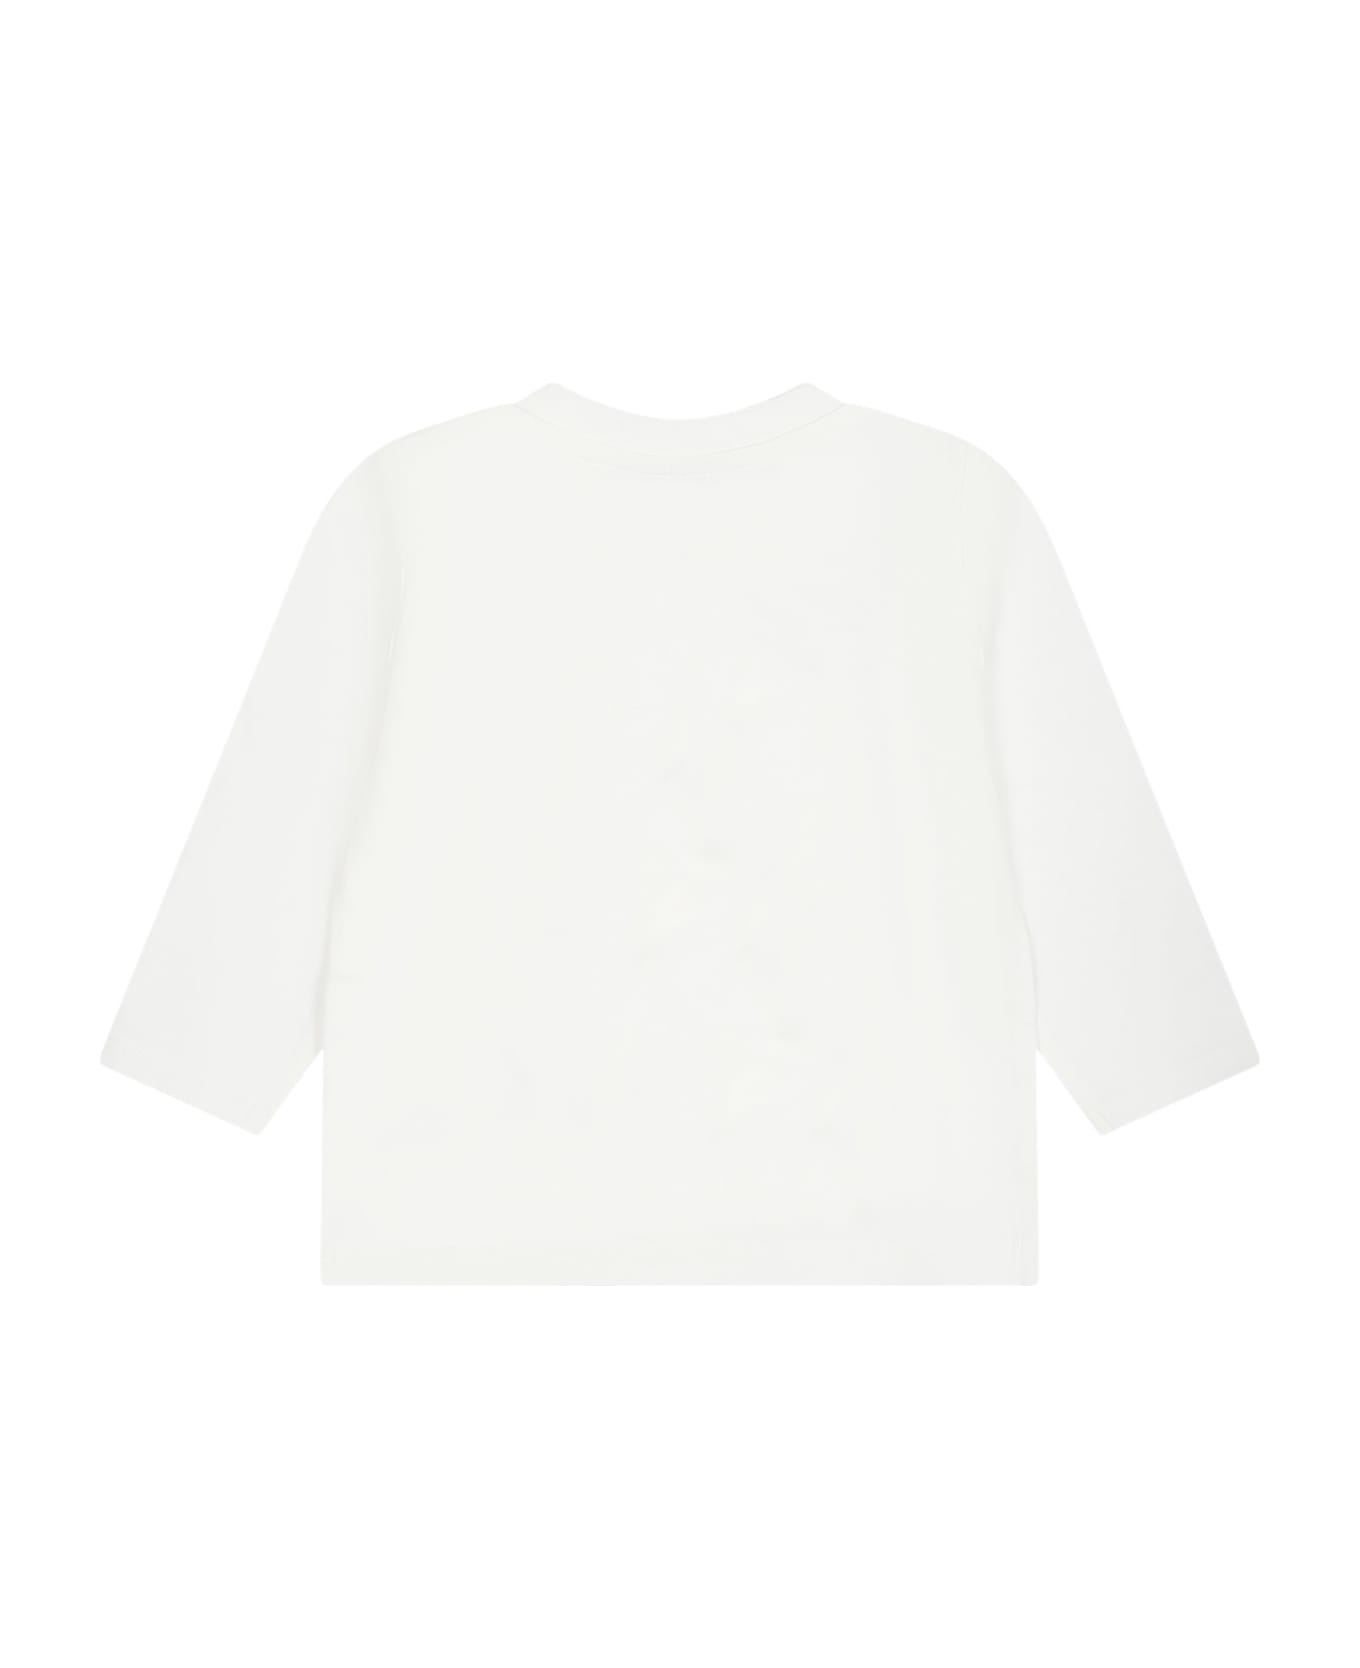 Stella McCartney Kids White T-shirt For Baby Girl With Penguin Print - Ivory